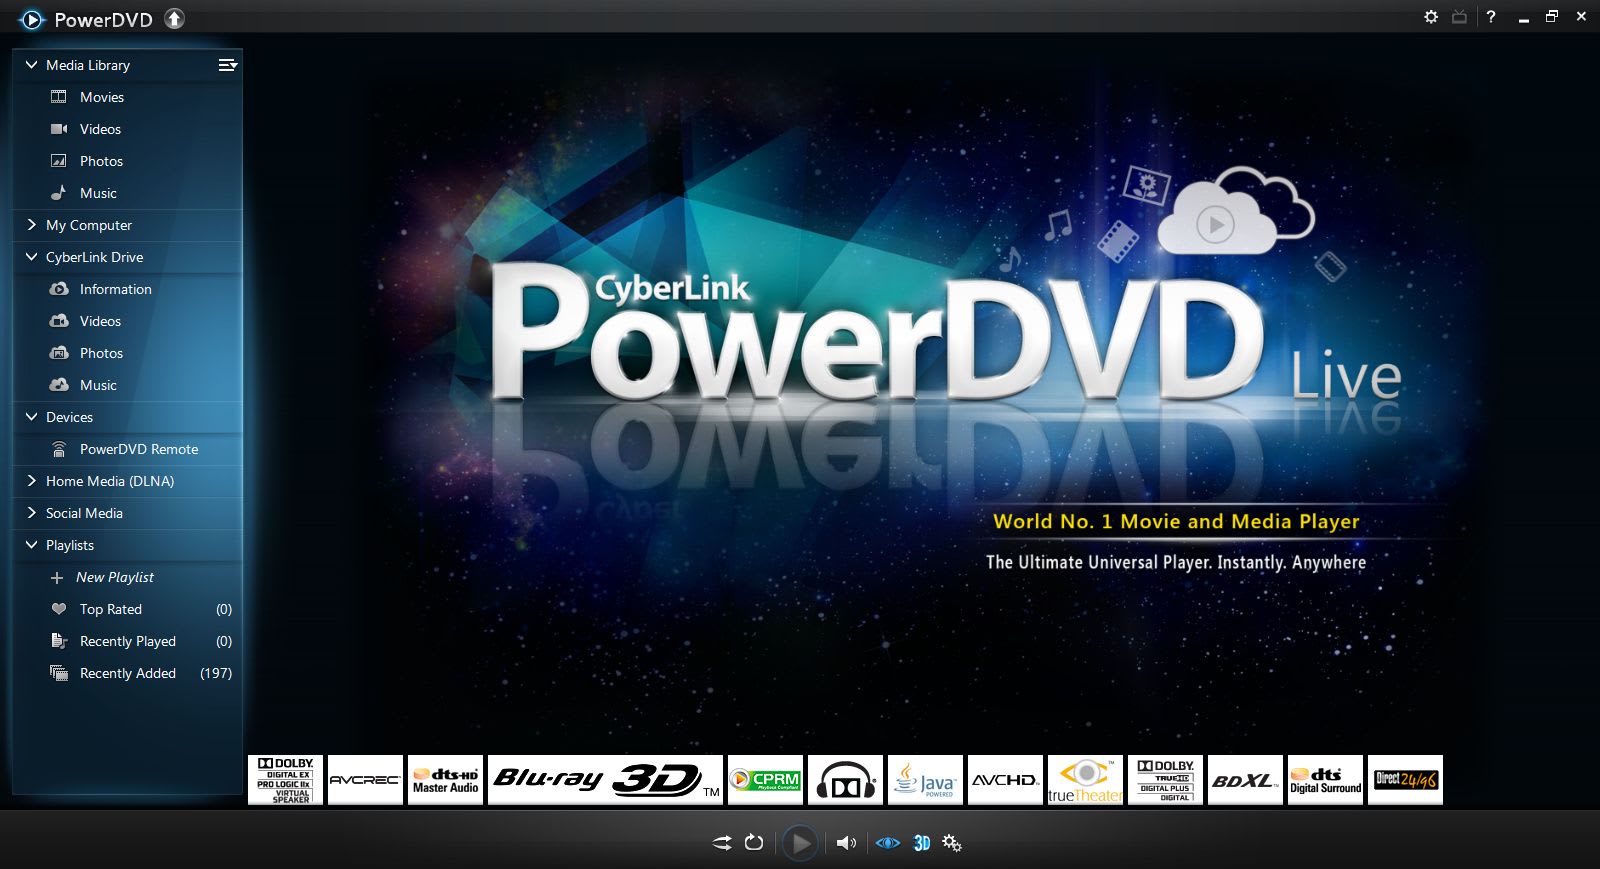 Powerdvd 10 free download for windows 10 64